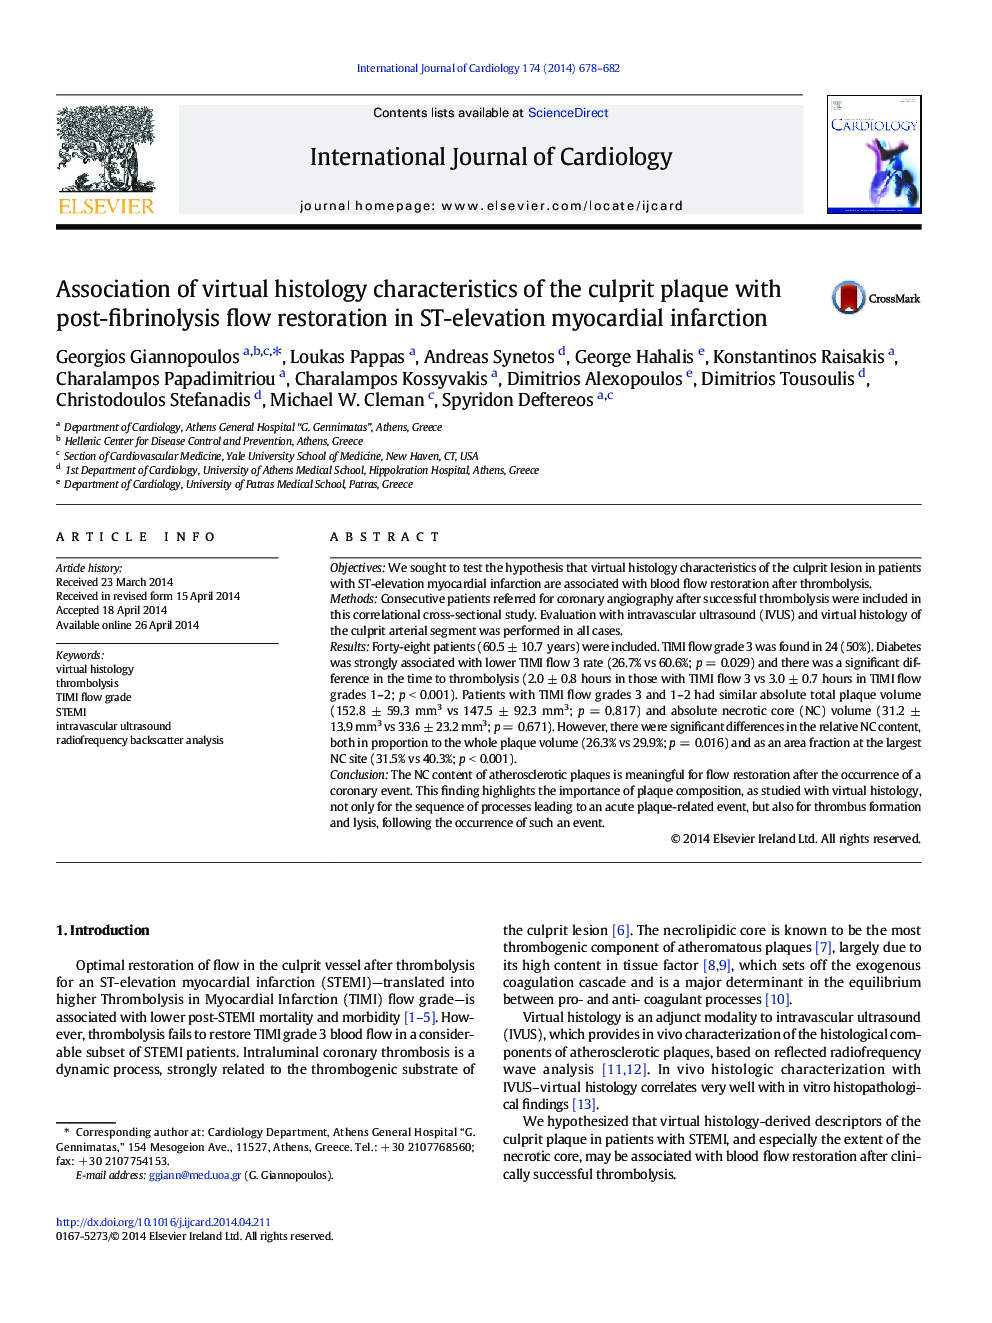 Association of virtual histology characteristics of the culprit plaque with post-fibrinolysis flow restoration in ST-elevation myocardial infarction